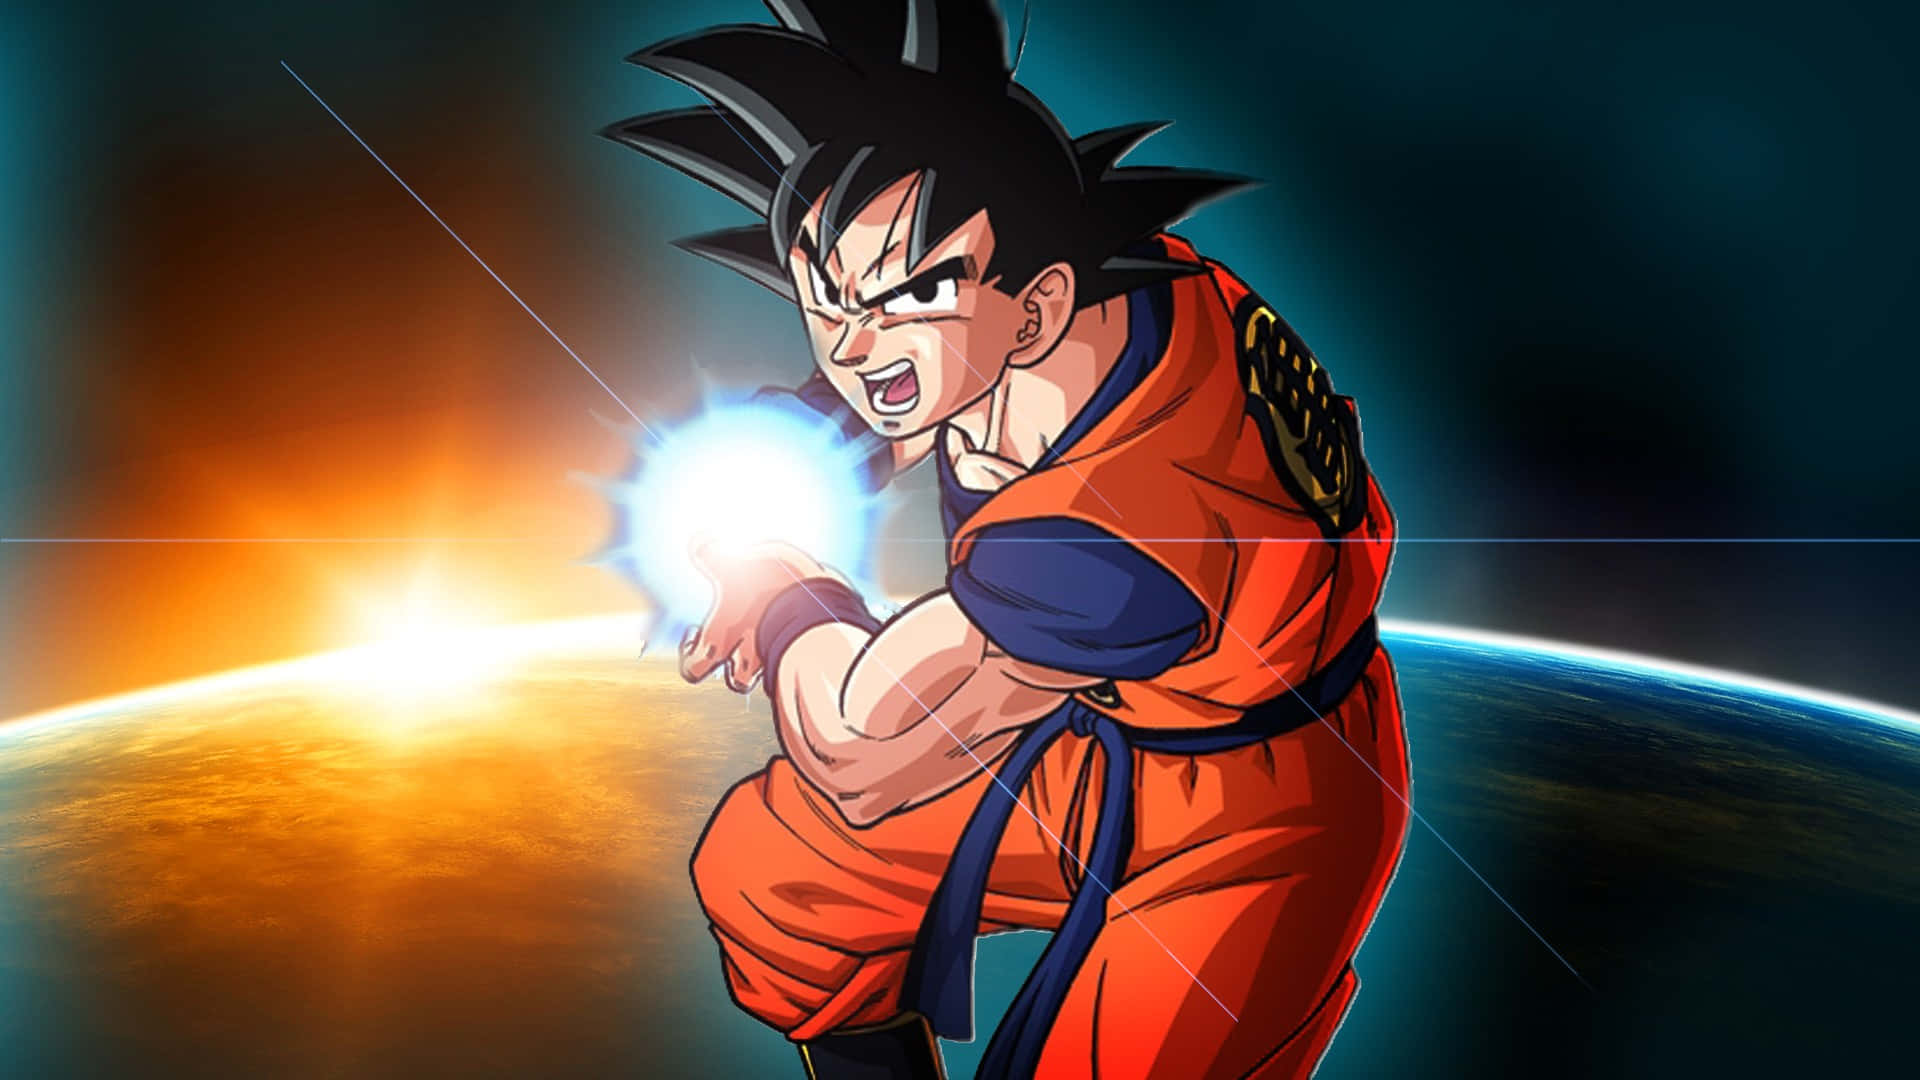 Imágenesmágicas De Dragon Ball Z Goku